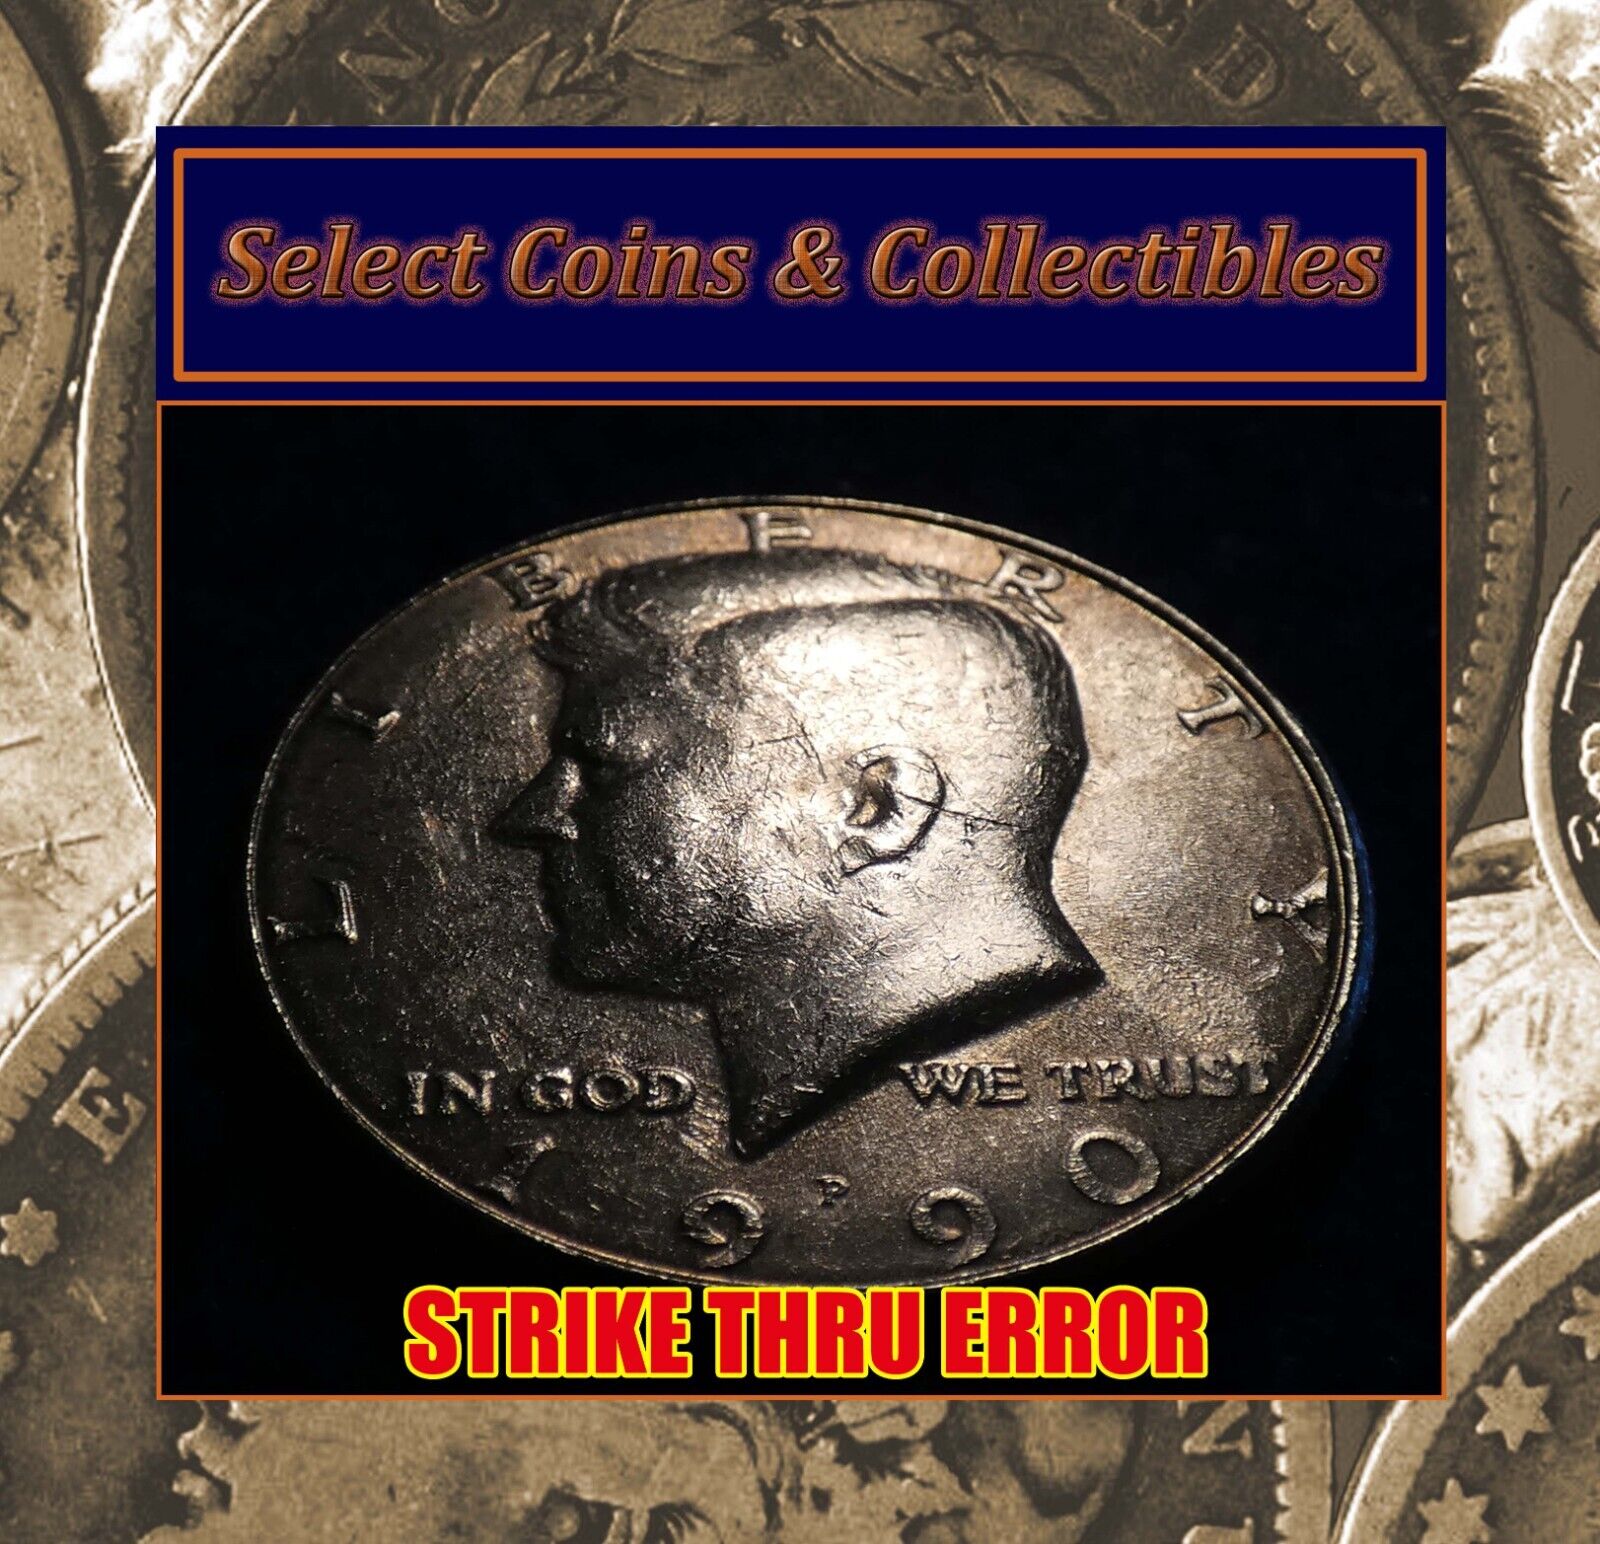 1990-P Kennedy Half Dollar Struck Through Grease Error Coin #1979